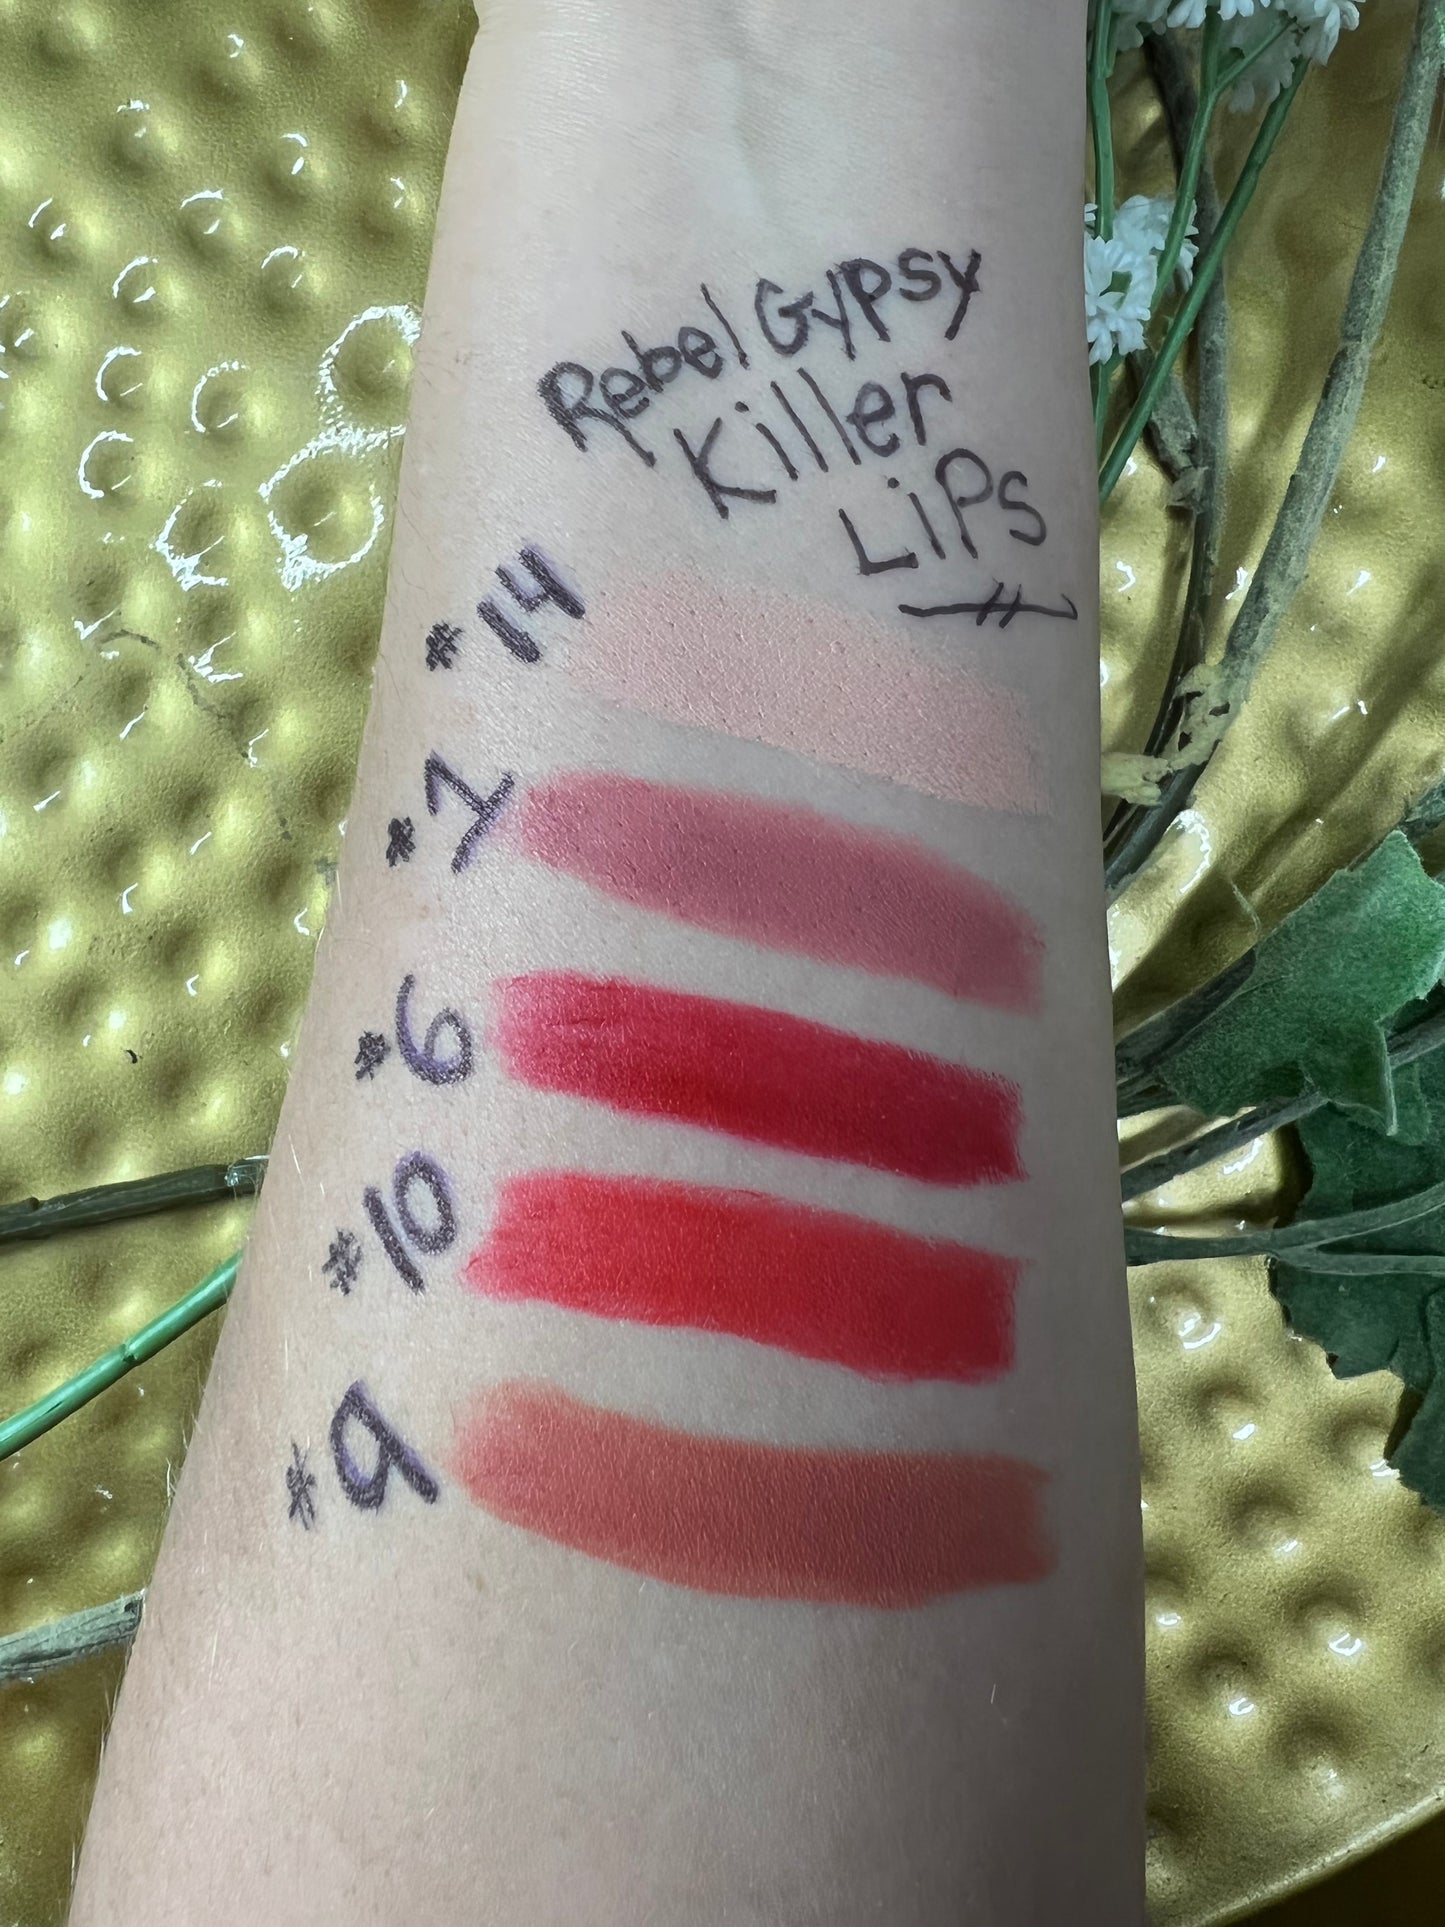 Rebel Gypsy Killer Lips Matte Lipstick